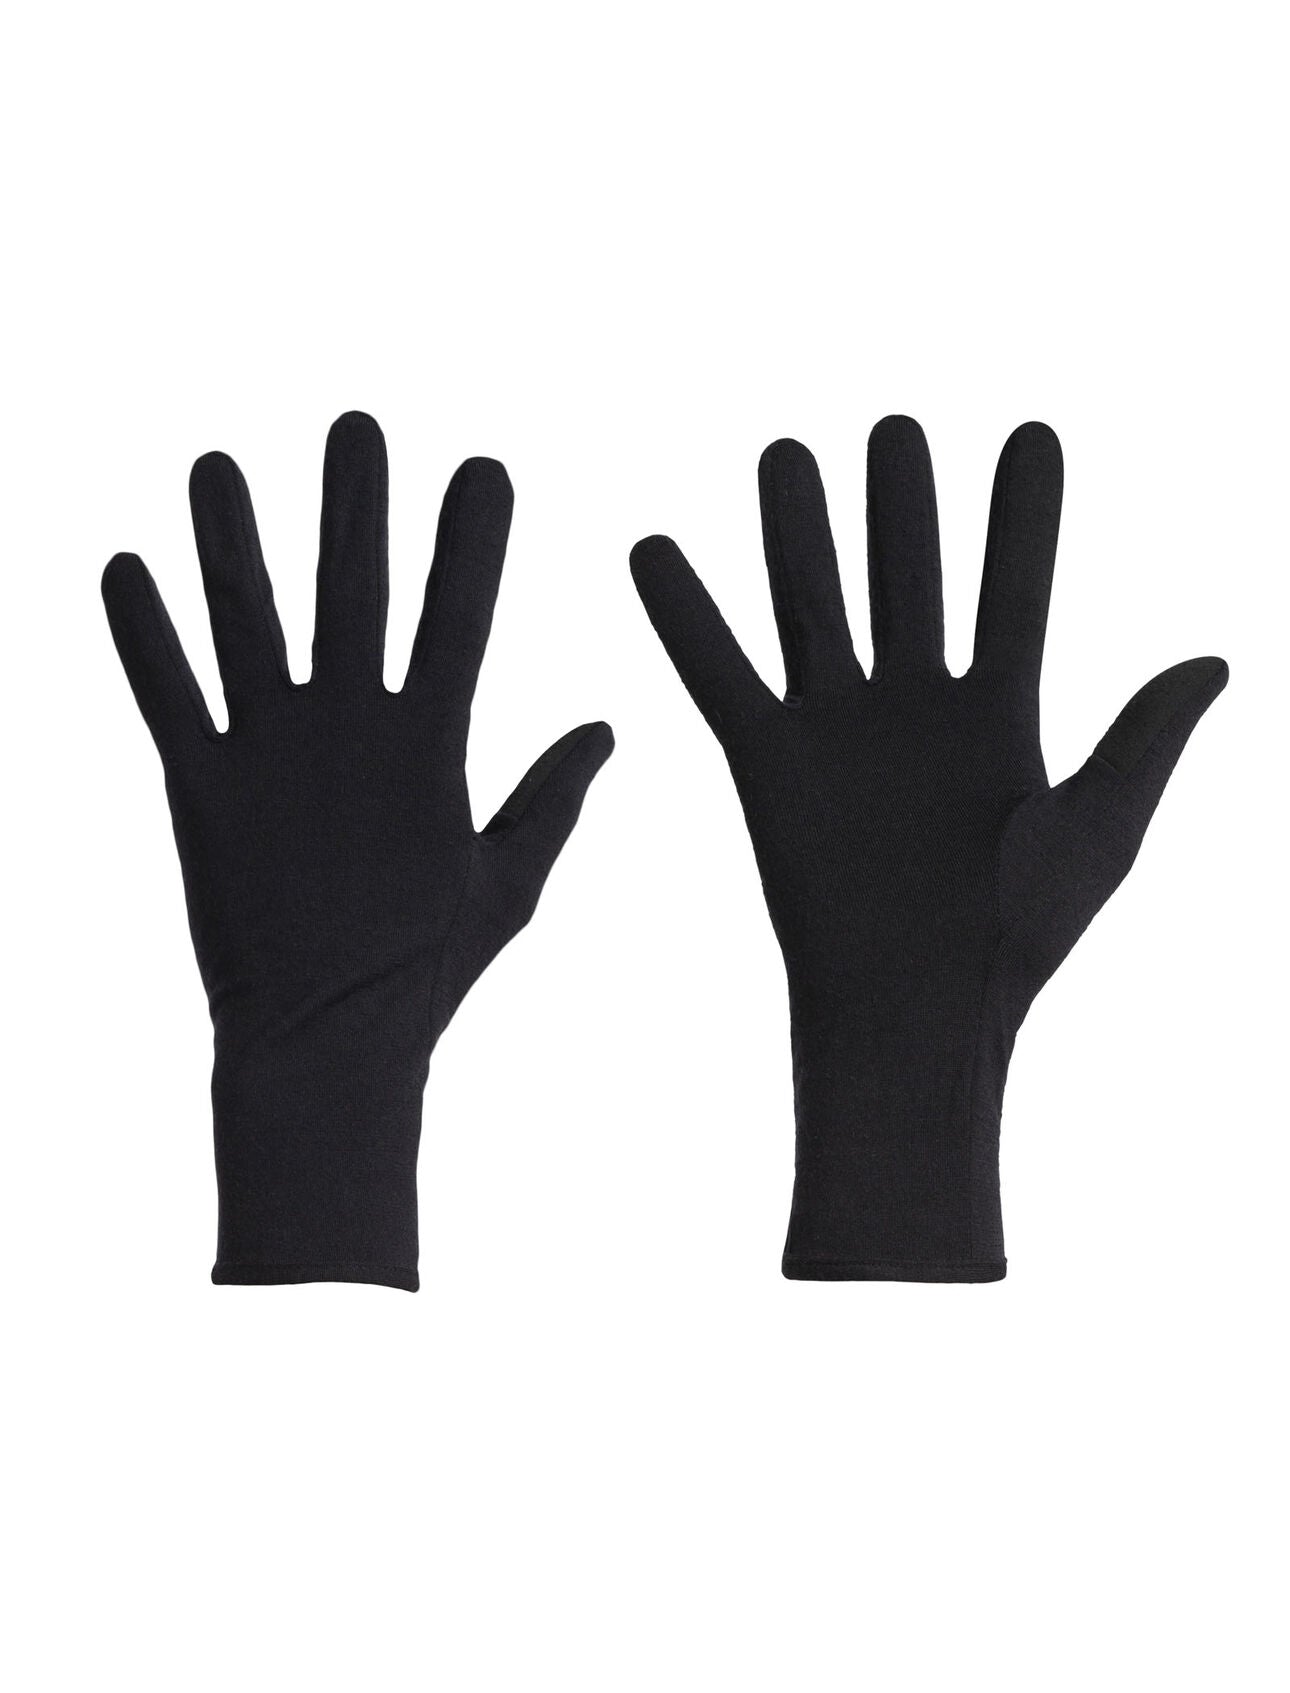 Icebreaker 260 Tech Liner Gloves (Unisex) Black W20 - Find Your Feet Australia Tasmania Hobart Launceston